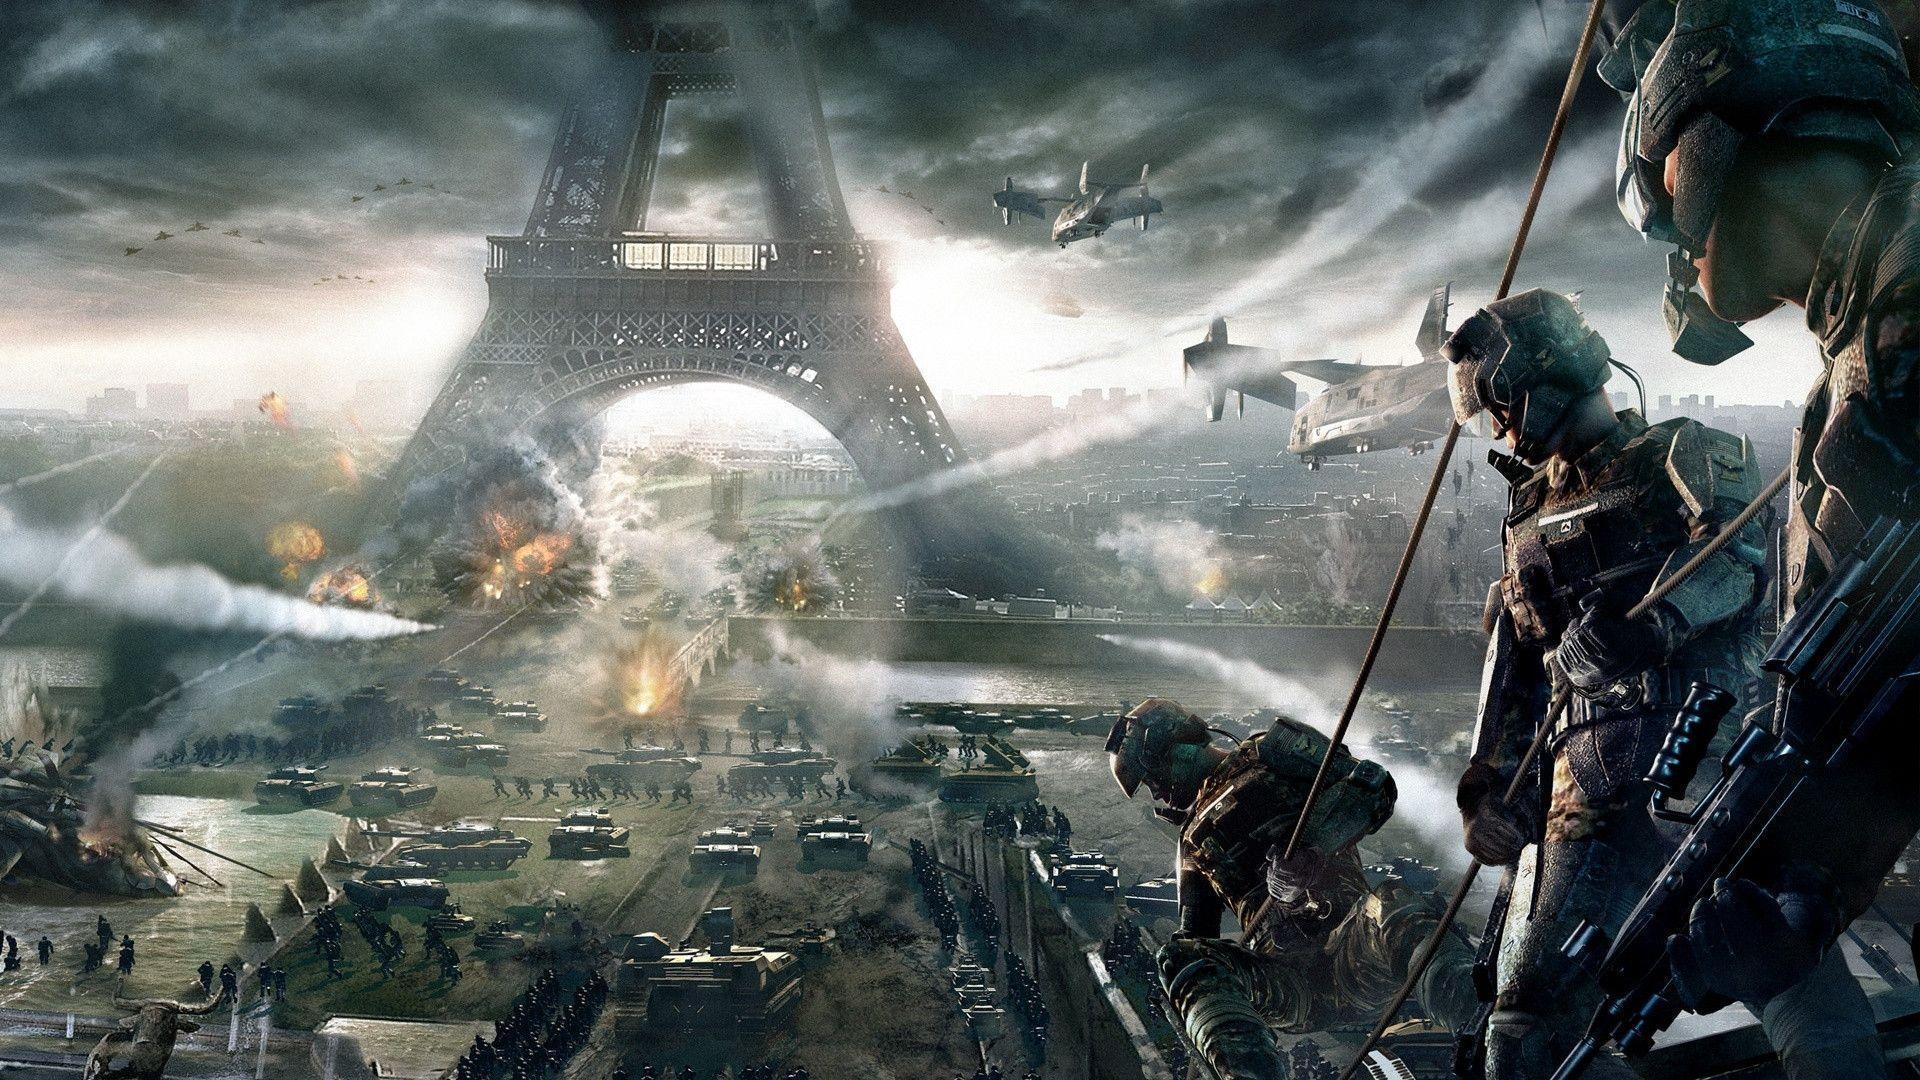 Call of Duty Modern Warfare 3 Wallpaper Free Call of Duty Modern Warfare 3 Background